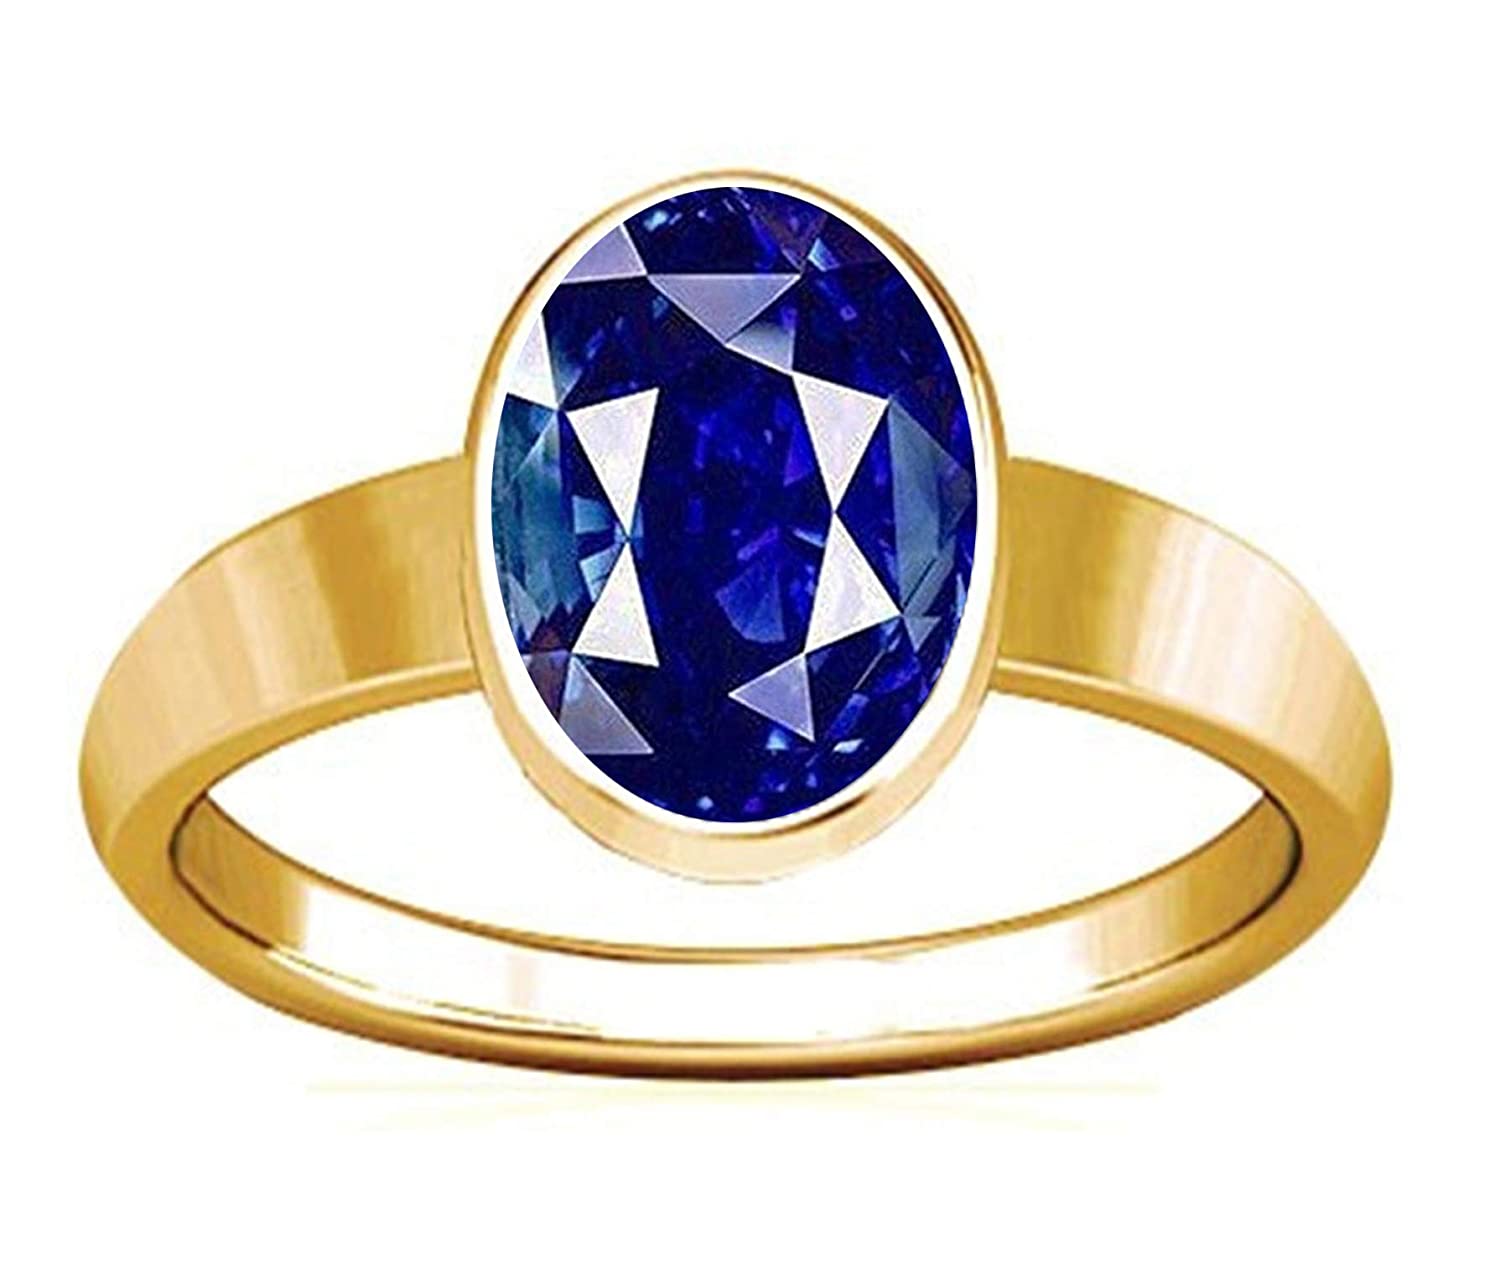 Buy World Antique Inc 16.25 Ratti Neelam Ring Unheated Natural Blue Sapphire /Neelam Gemstone Natural Original Neelam Adjustable Silver Ring at Amazon.in